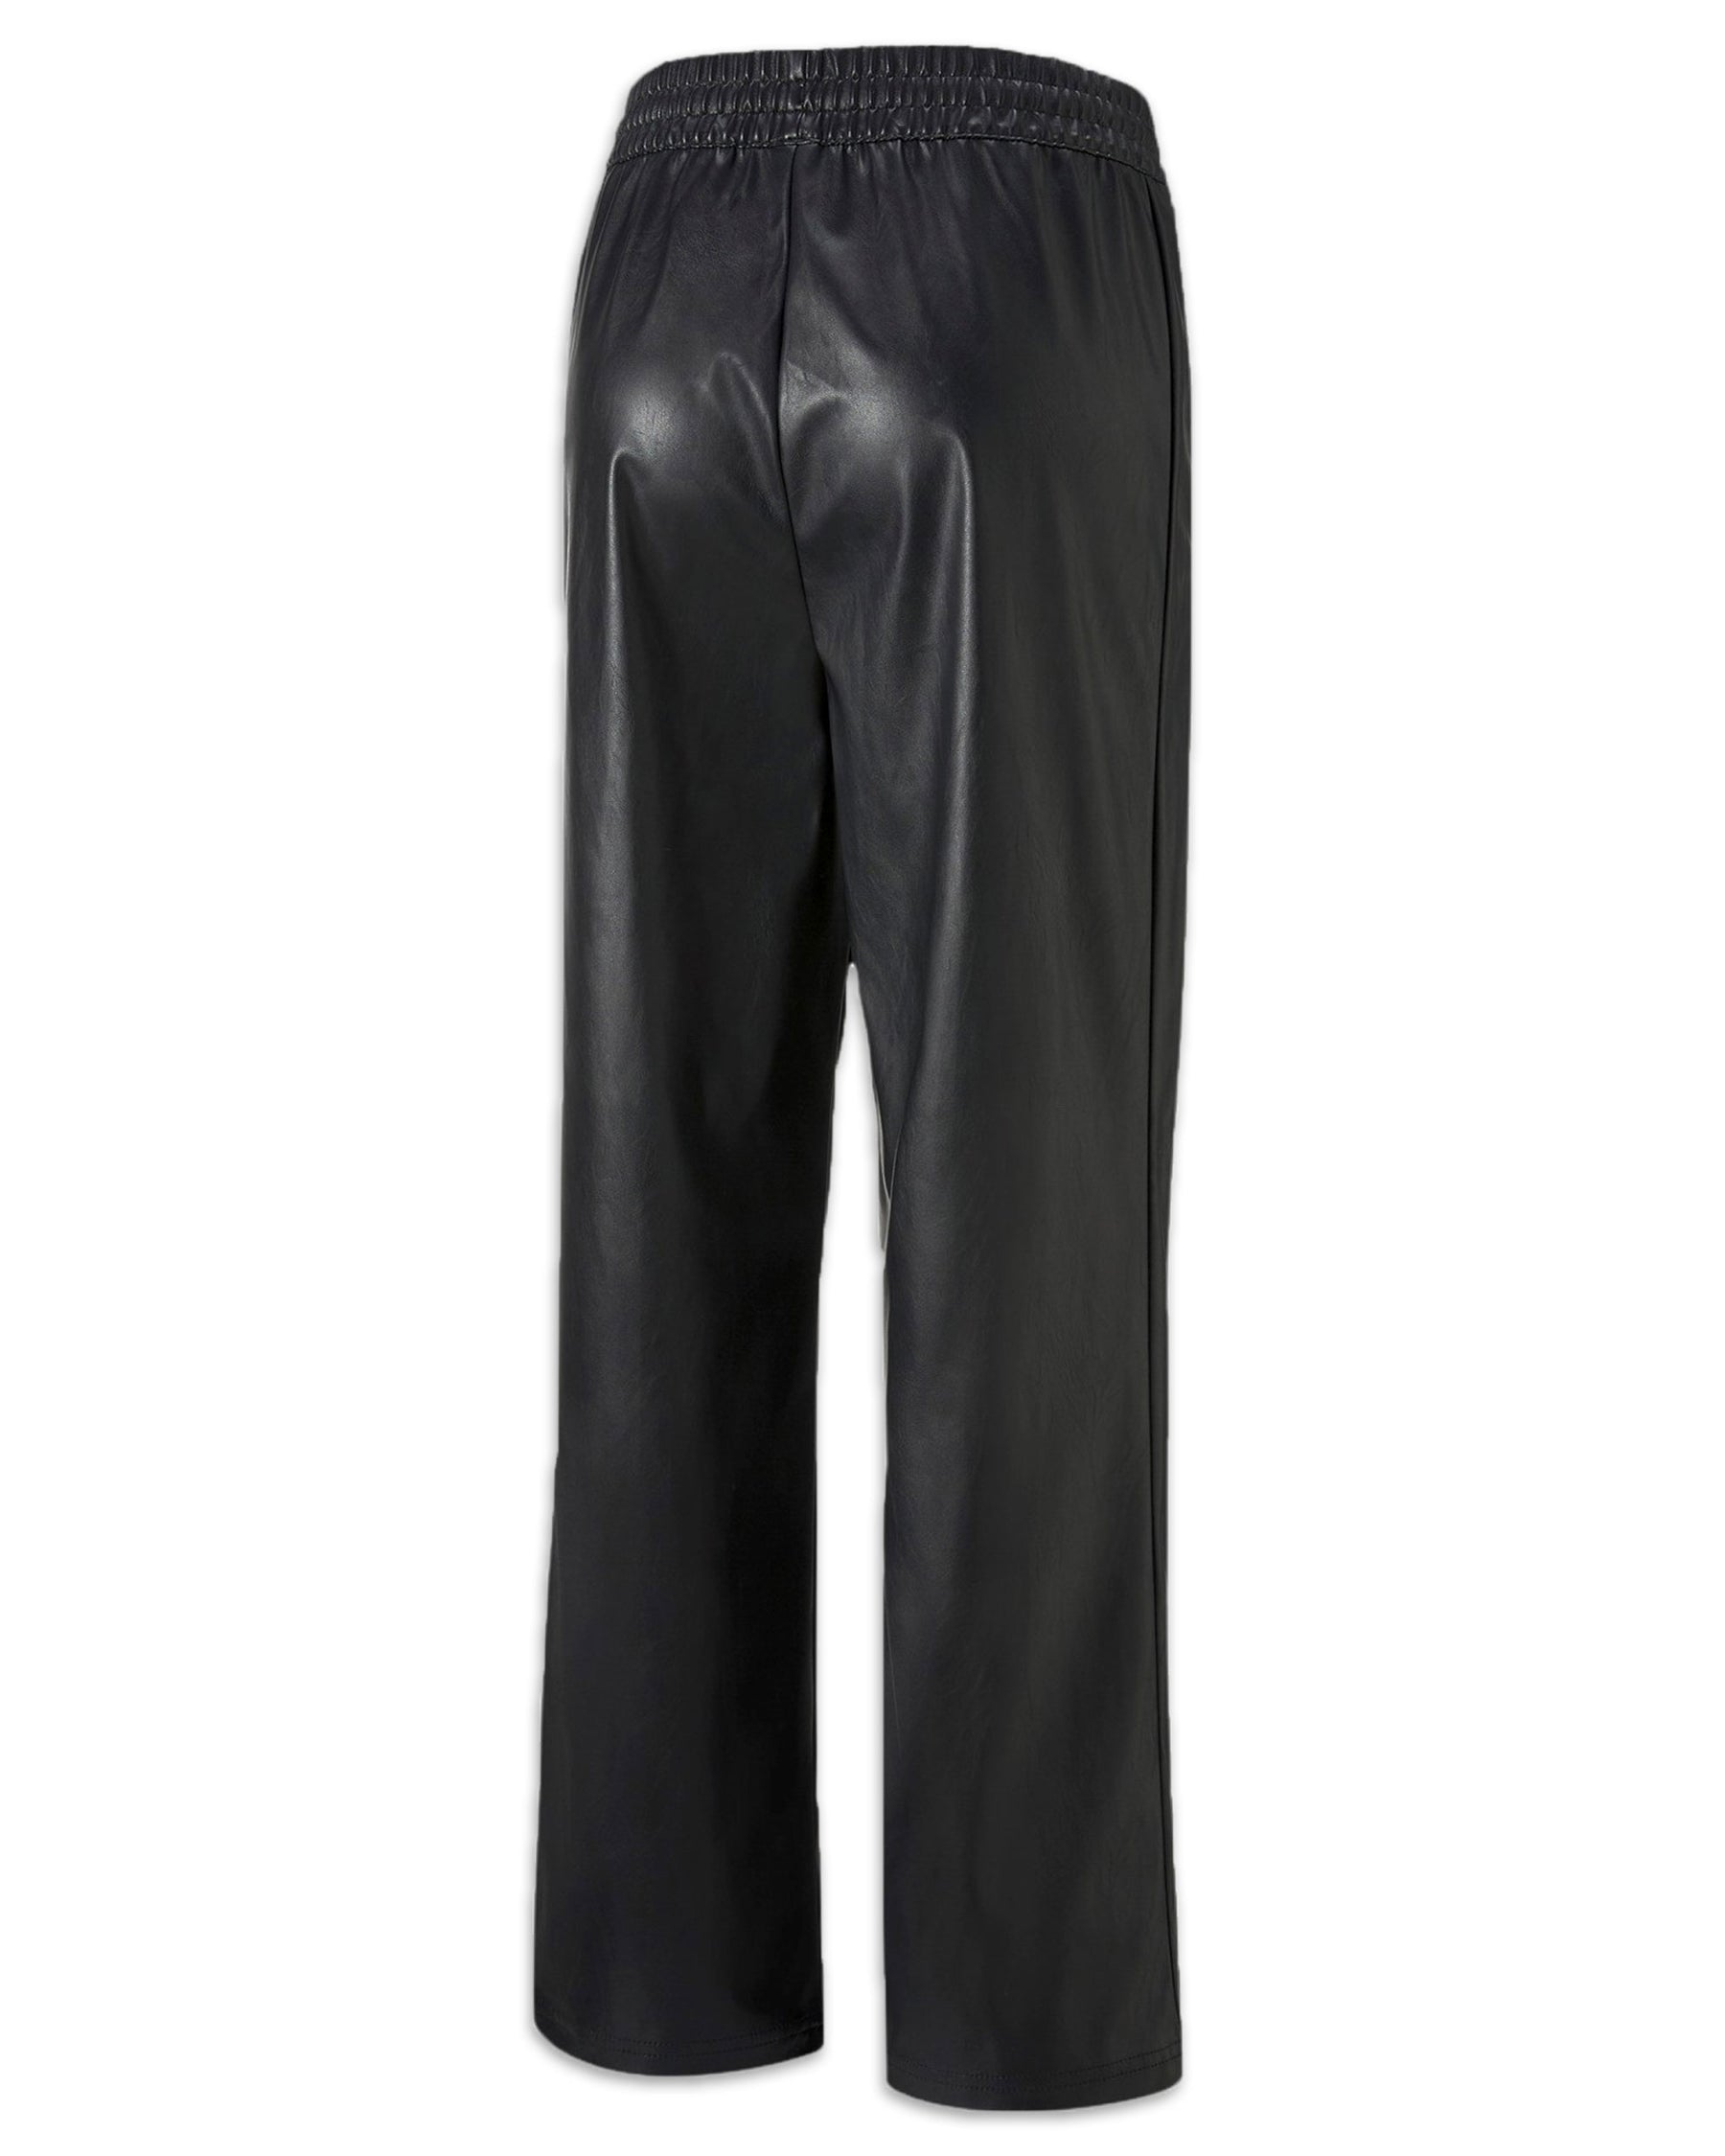 Pantalone Donna Puma T7 Faux Leather Nero